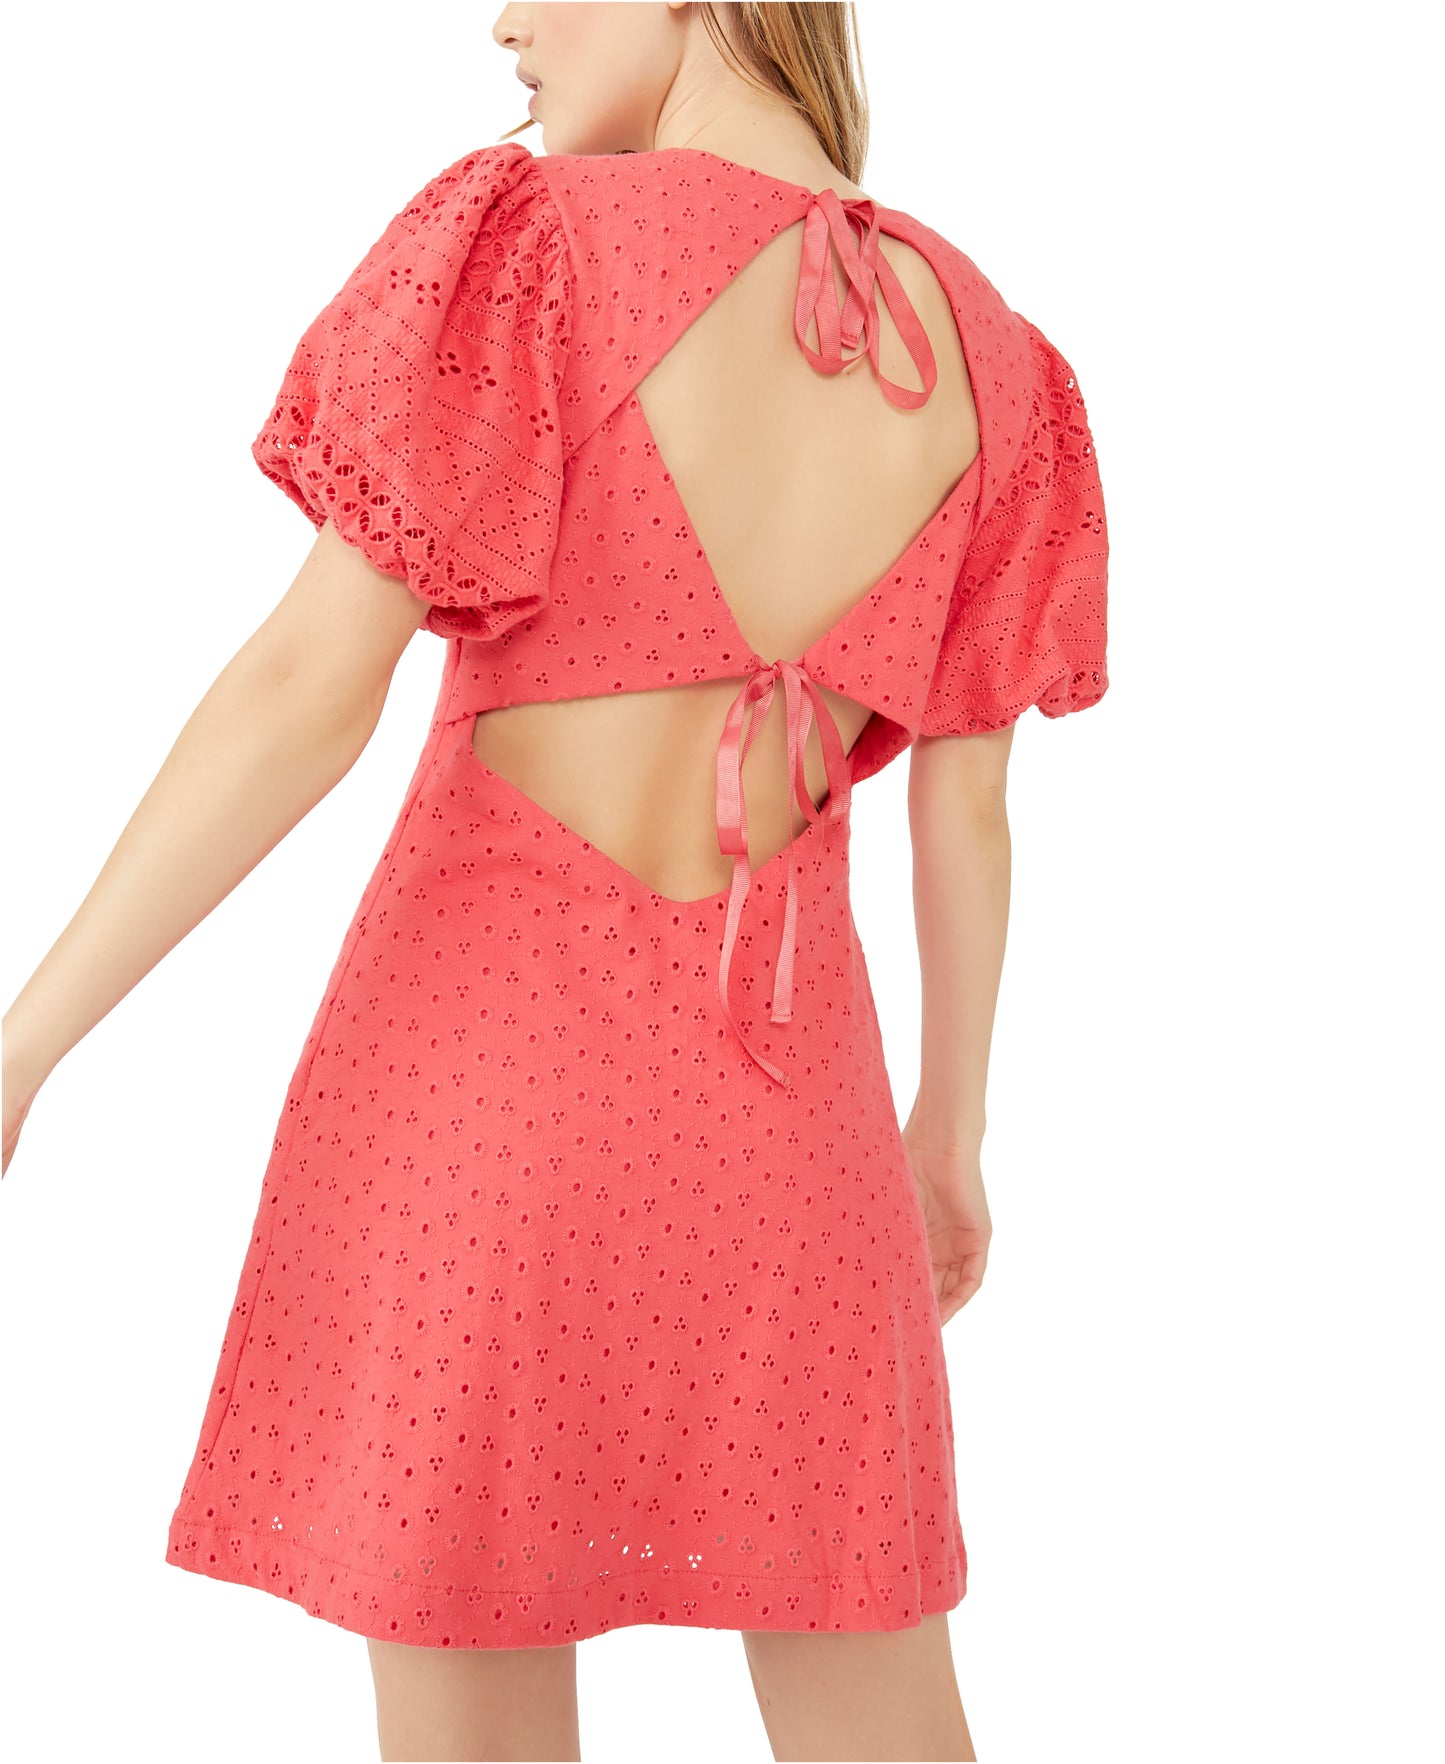 Free People Apricot Rose Mini Dress